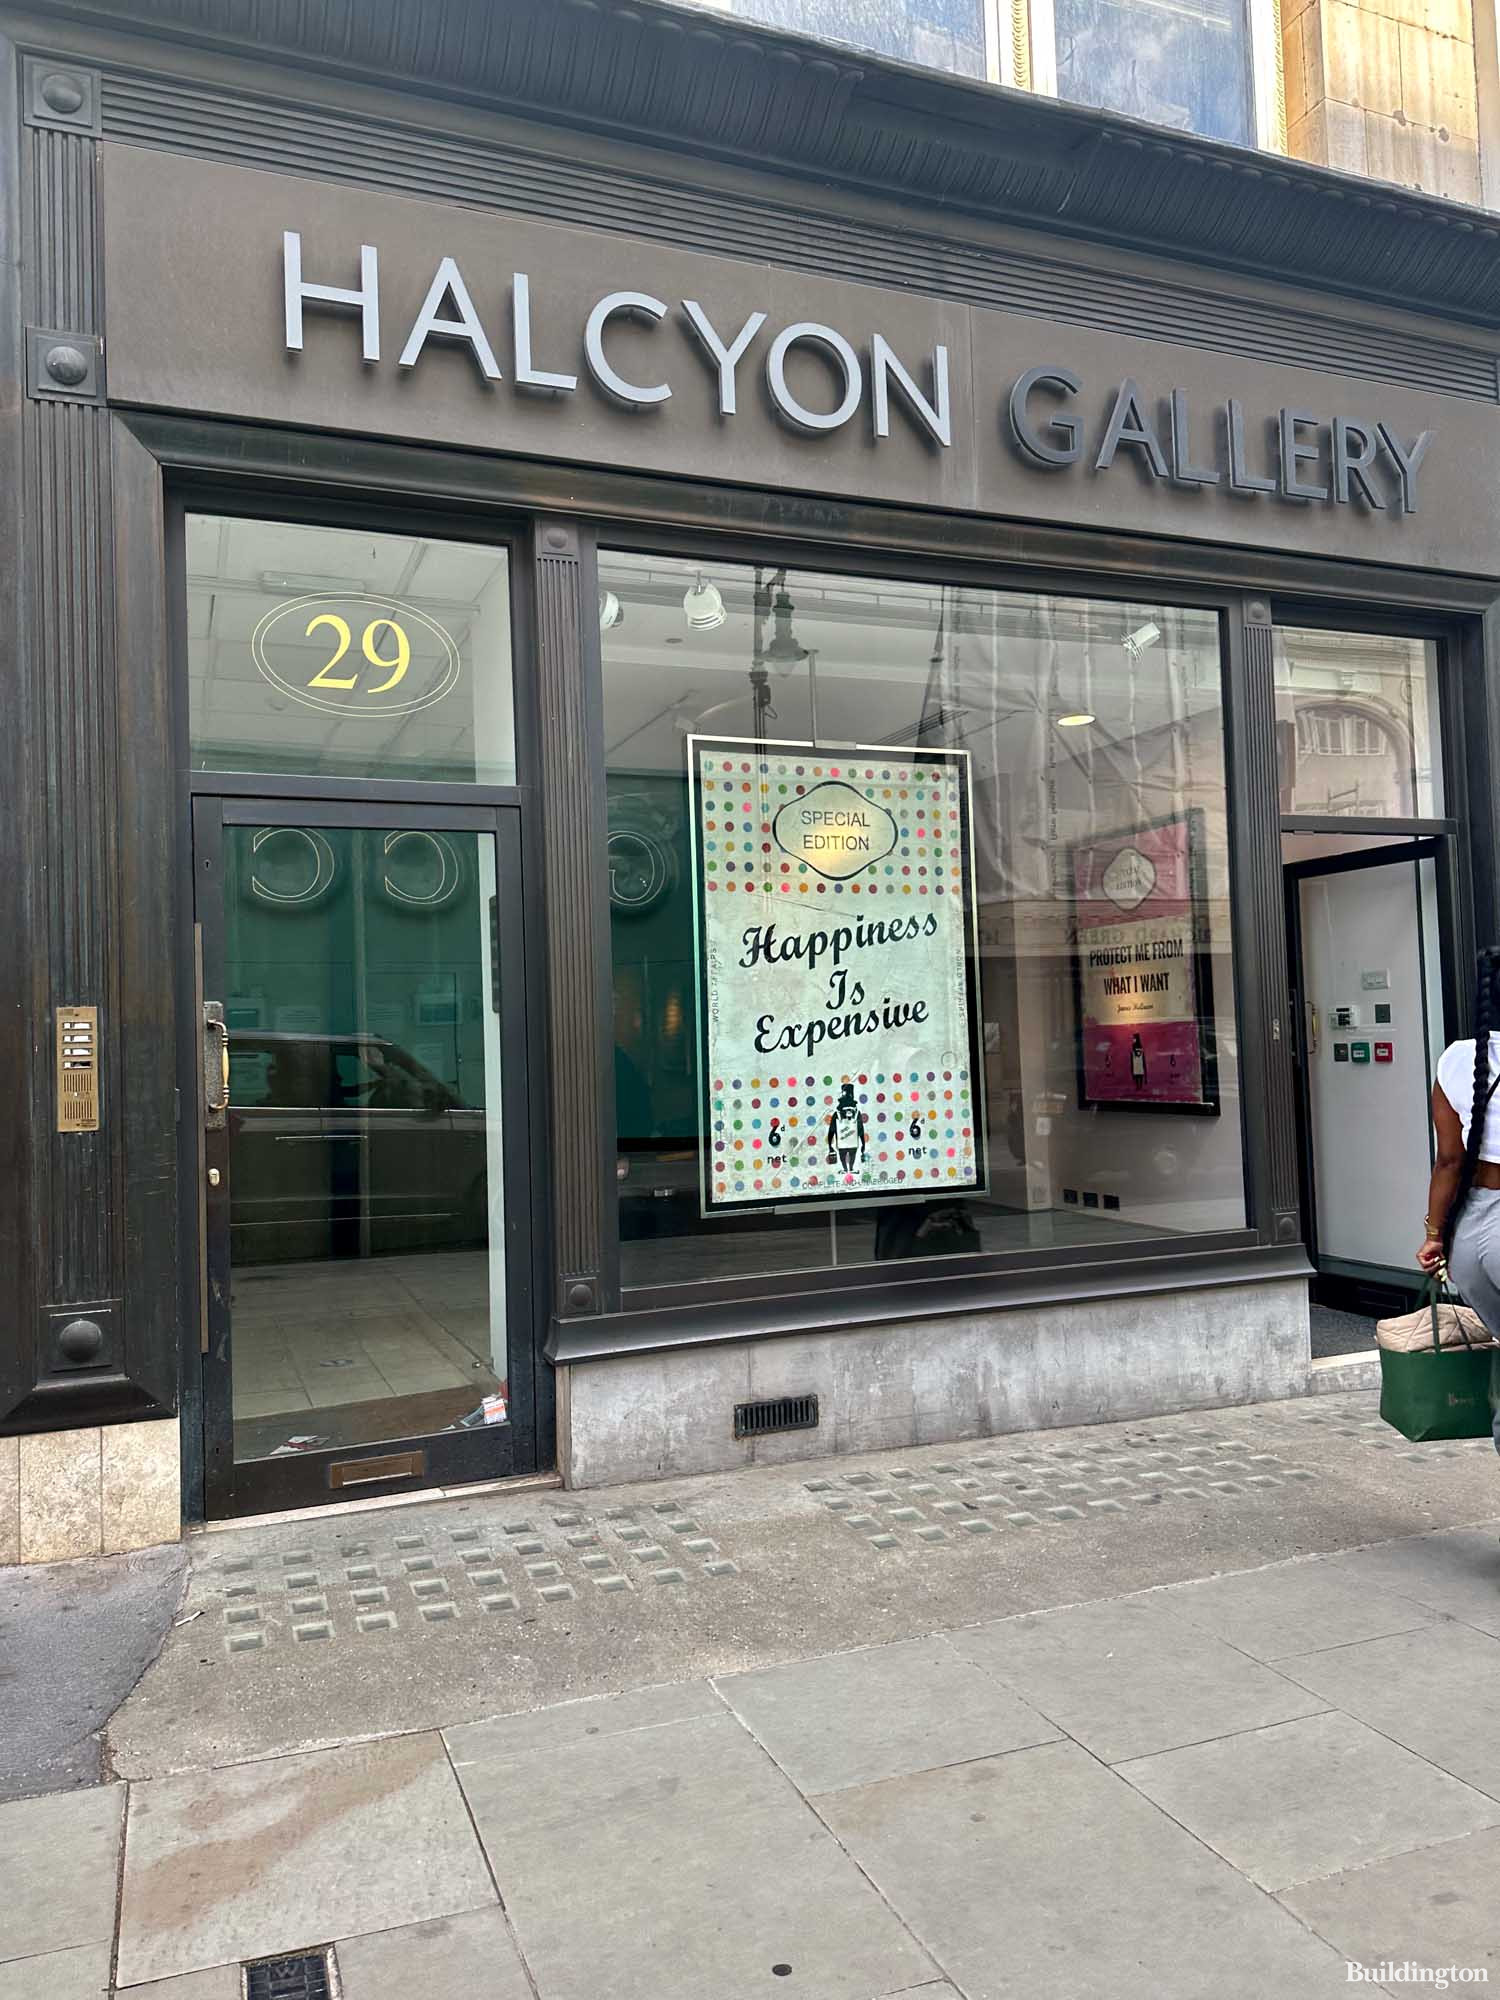 Halcyon Gallery at 29 New Bond Street in Mayfair, London W1.